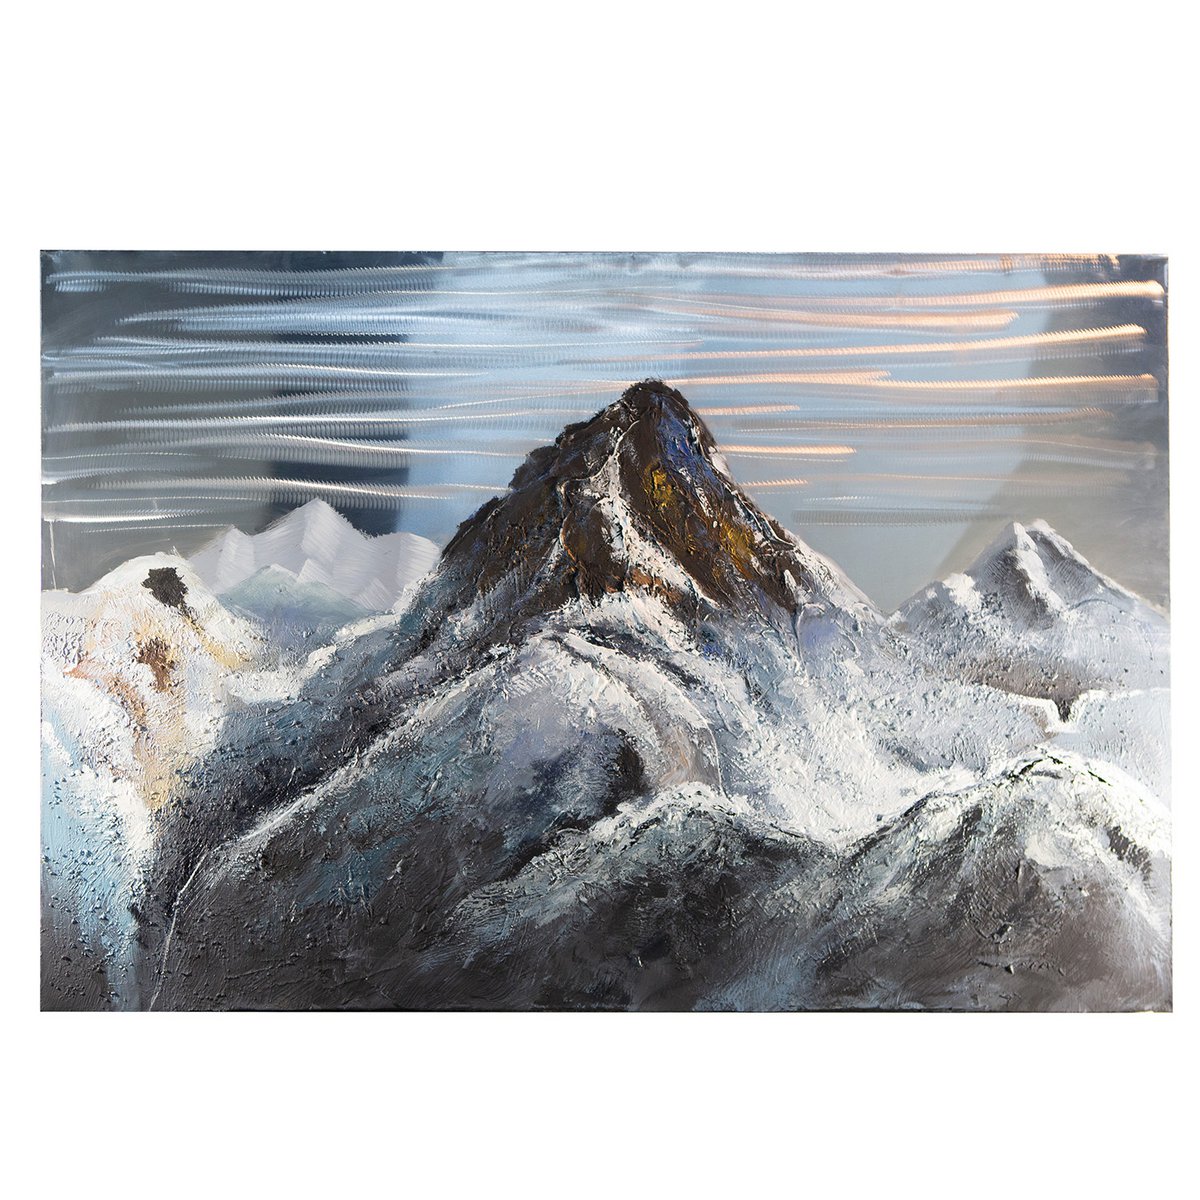 Aluminium/Leinen 3D Bild "Mountain" 150x100